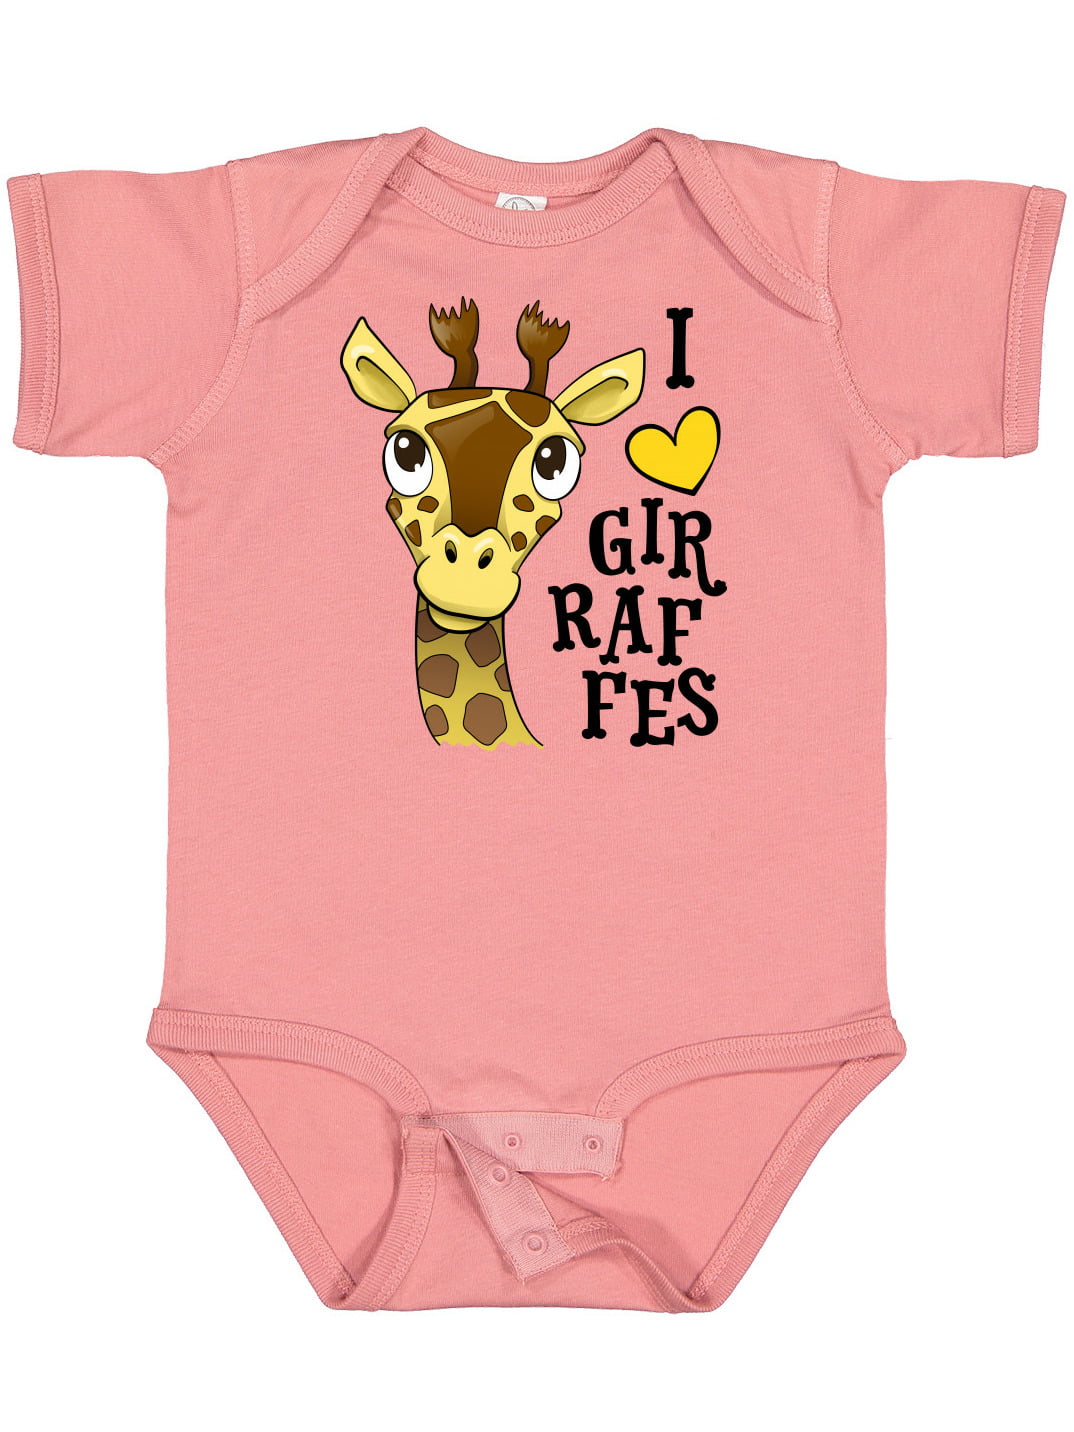 NEW Baby Boys Bodysuit 0-3 Months Monkey Giraffe Creeper Outfit 1 Piece Infant